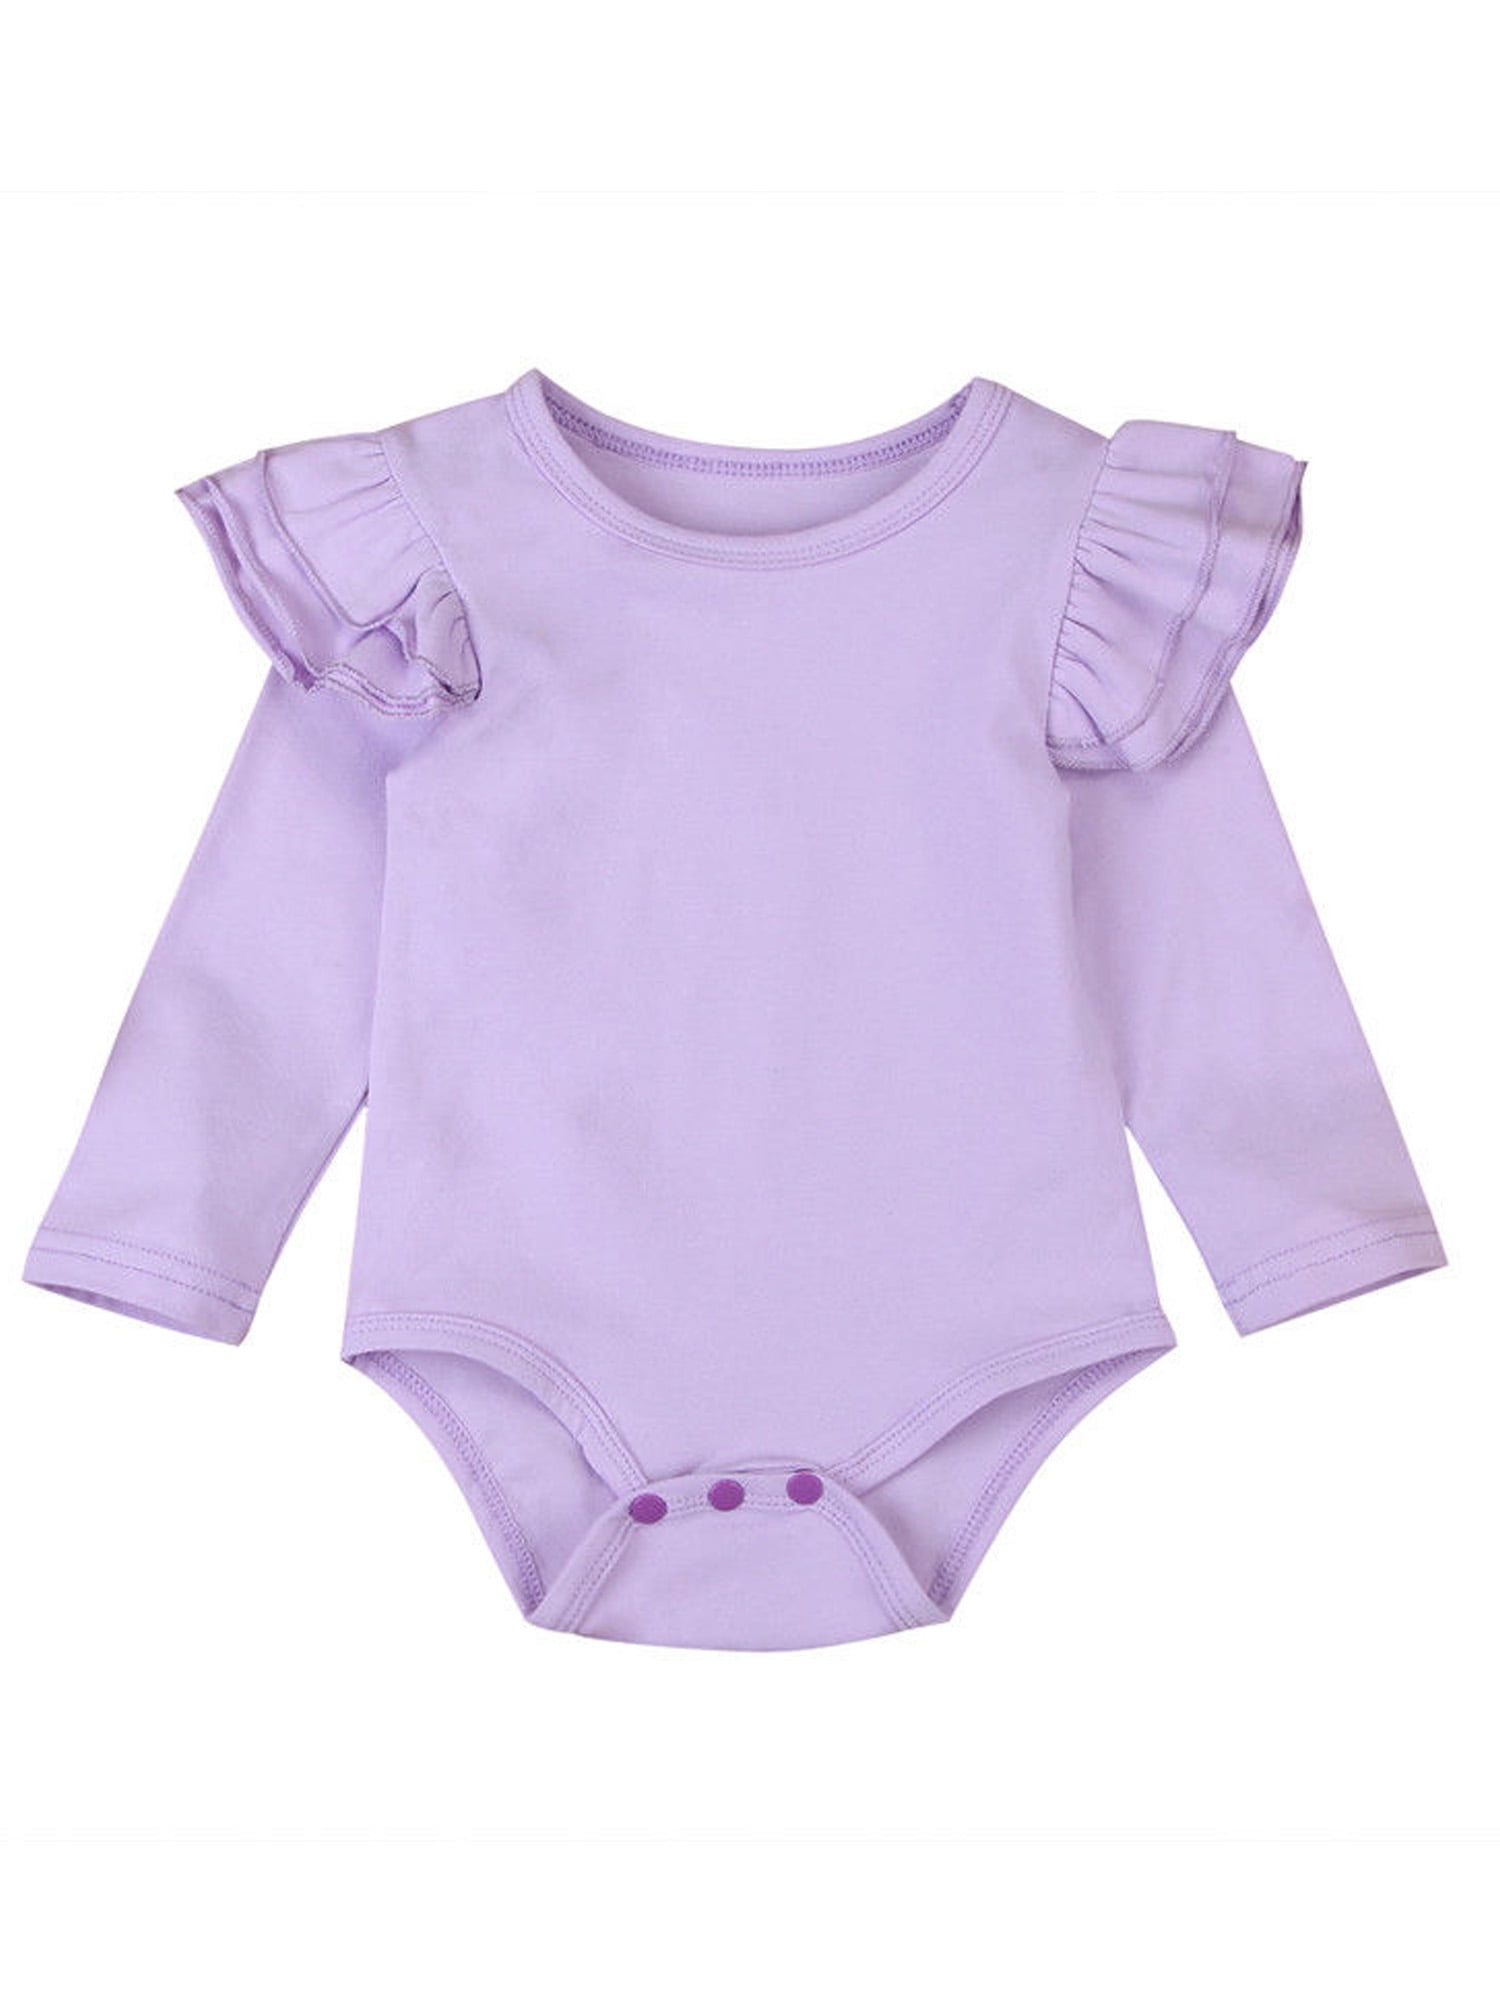 Toddler Infant Baby Boys&Girls Long Sleeve Ruffle Romper Bodysuit Clothes 